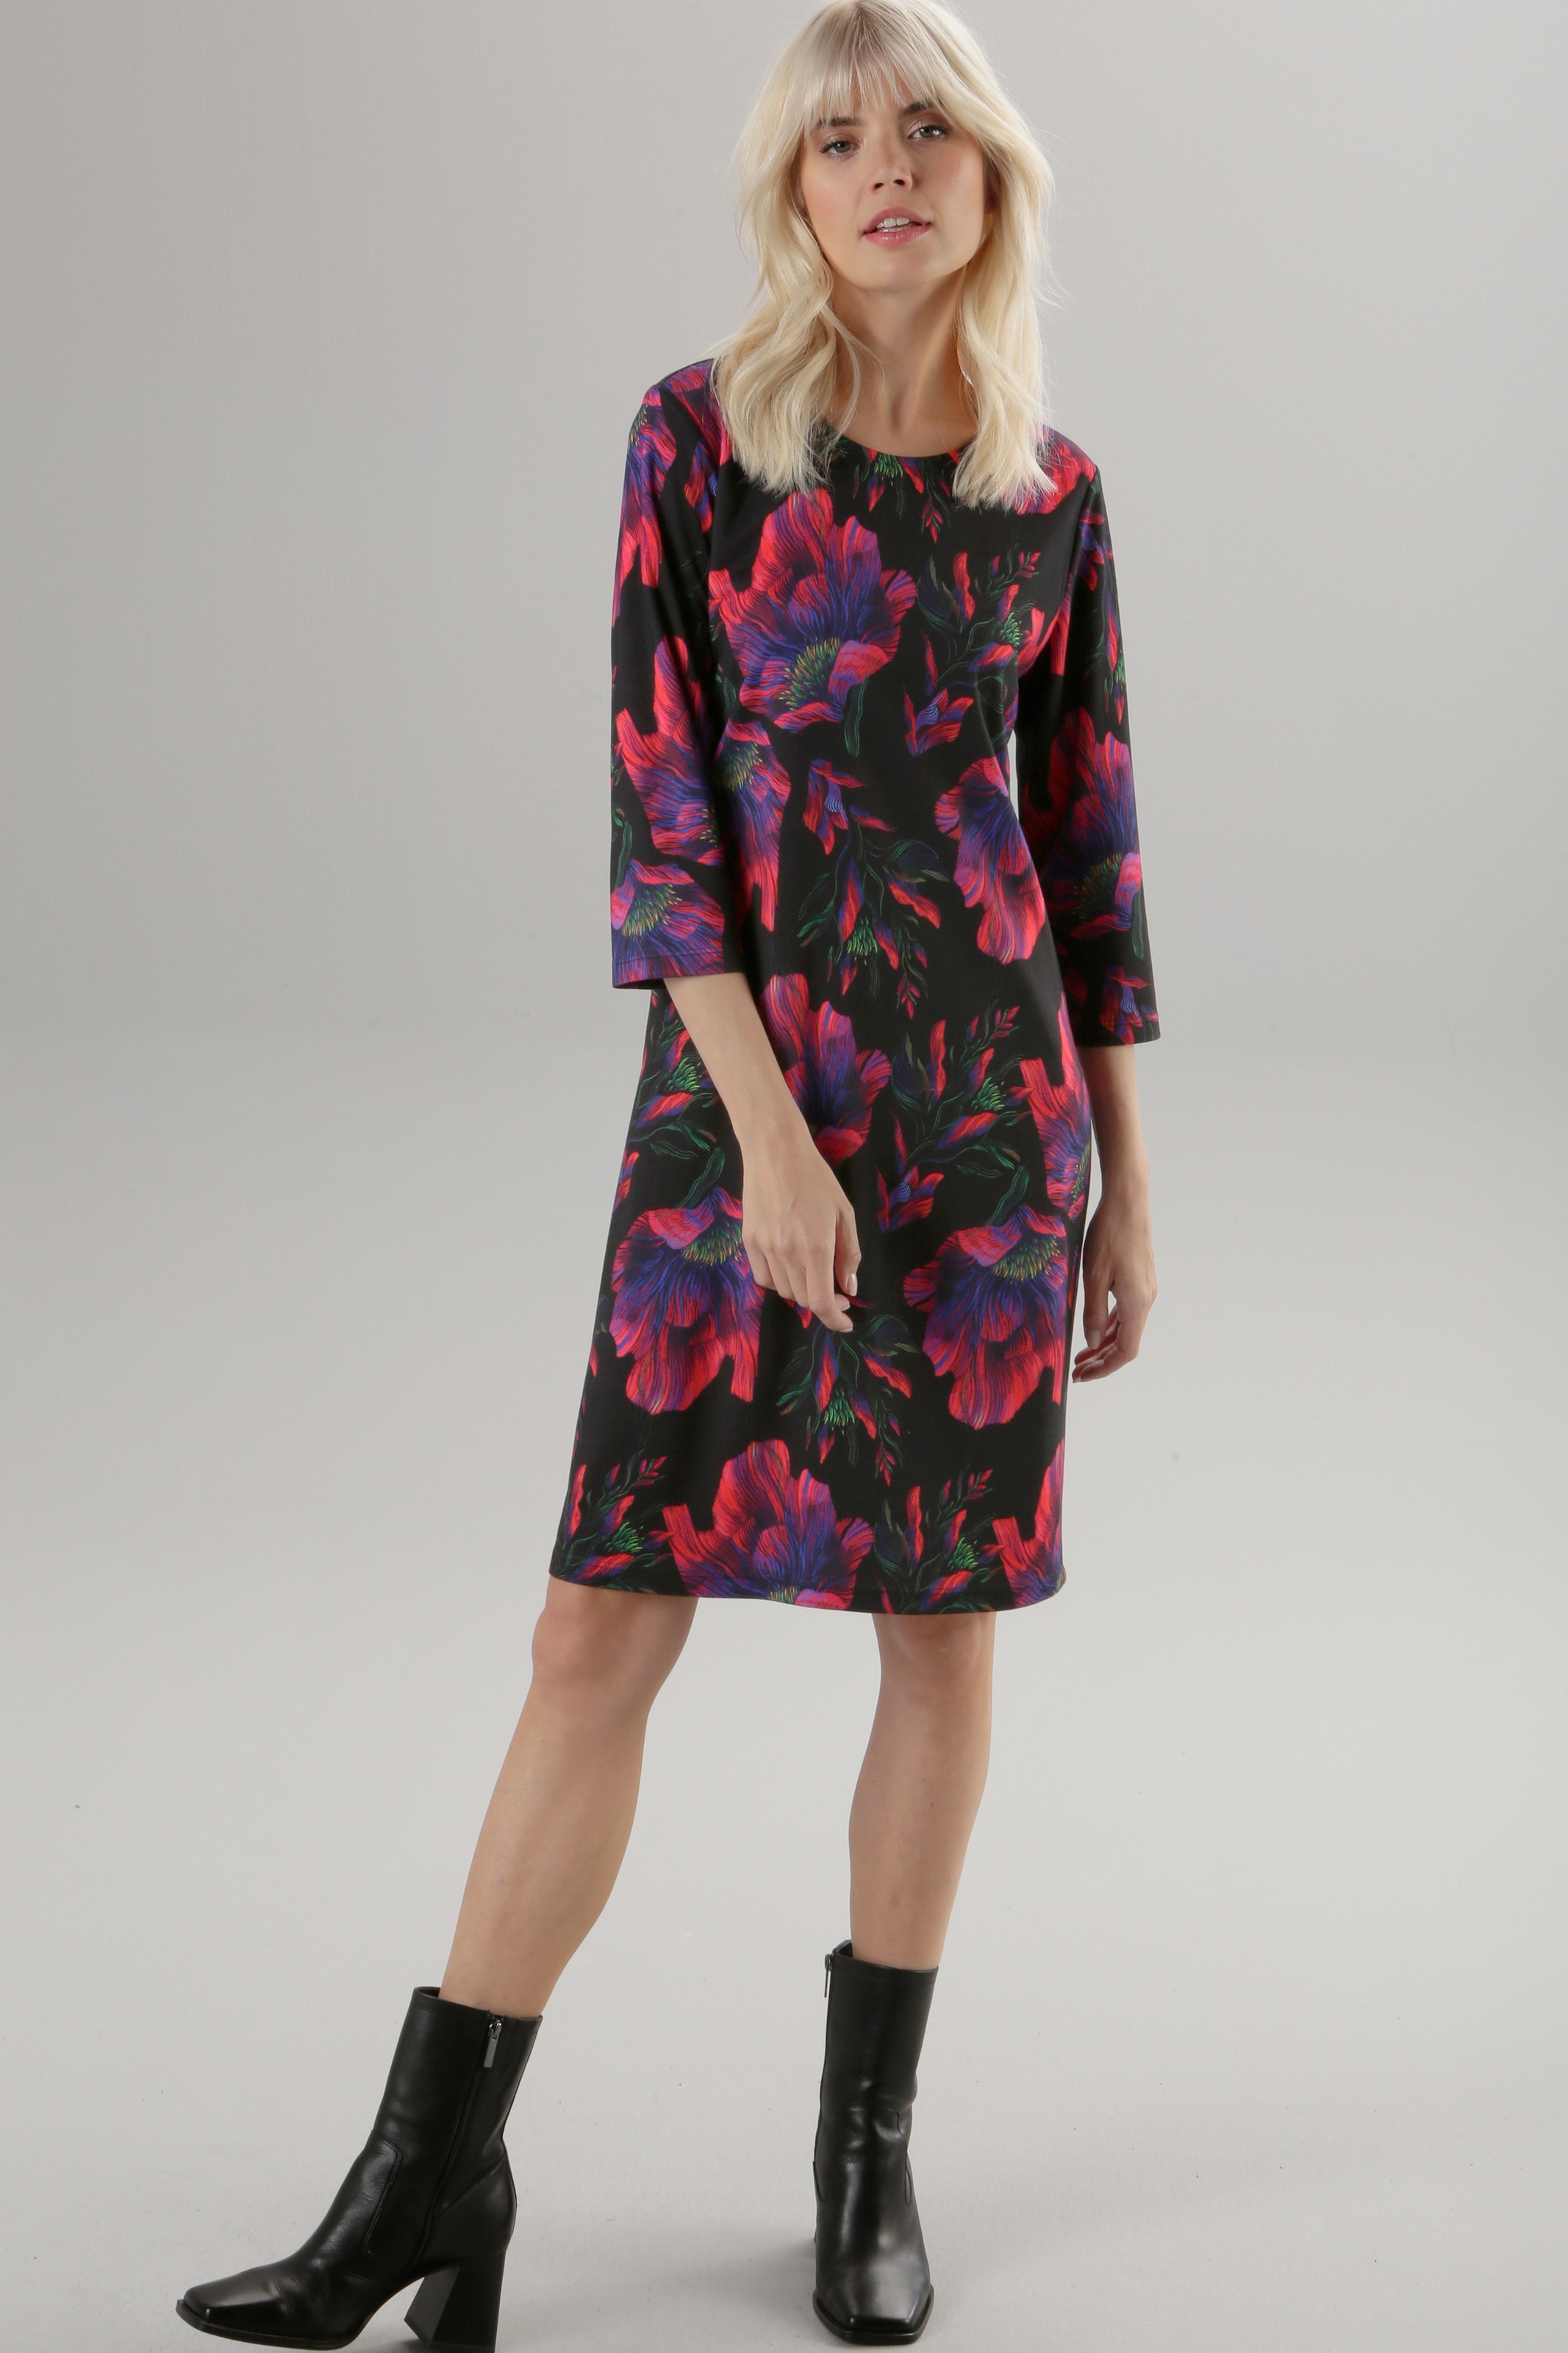 Aniston SELECTED Jerseykleid, bei in mit Knallfarben Blumendruck